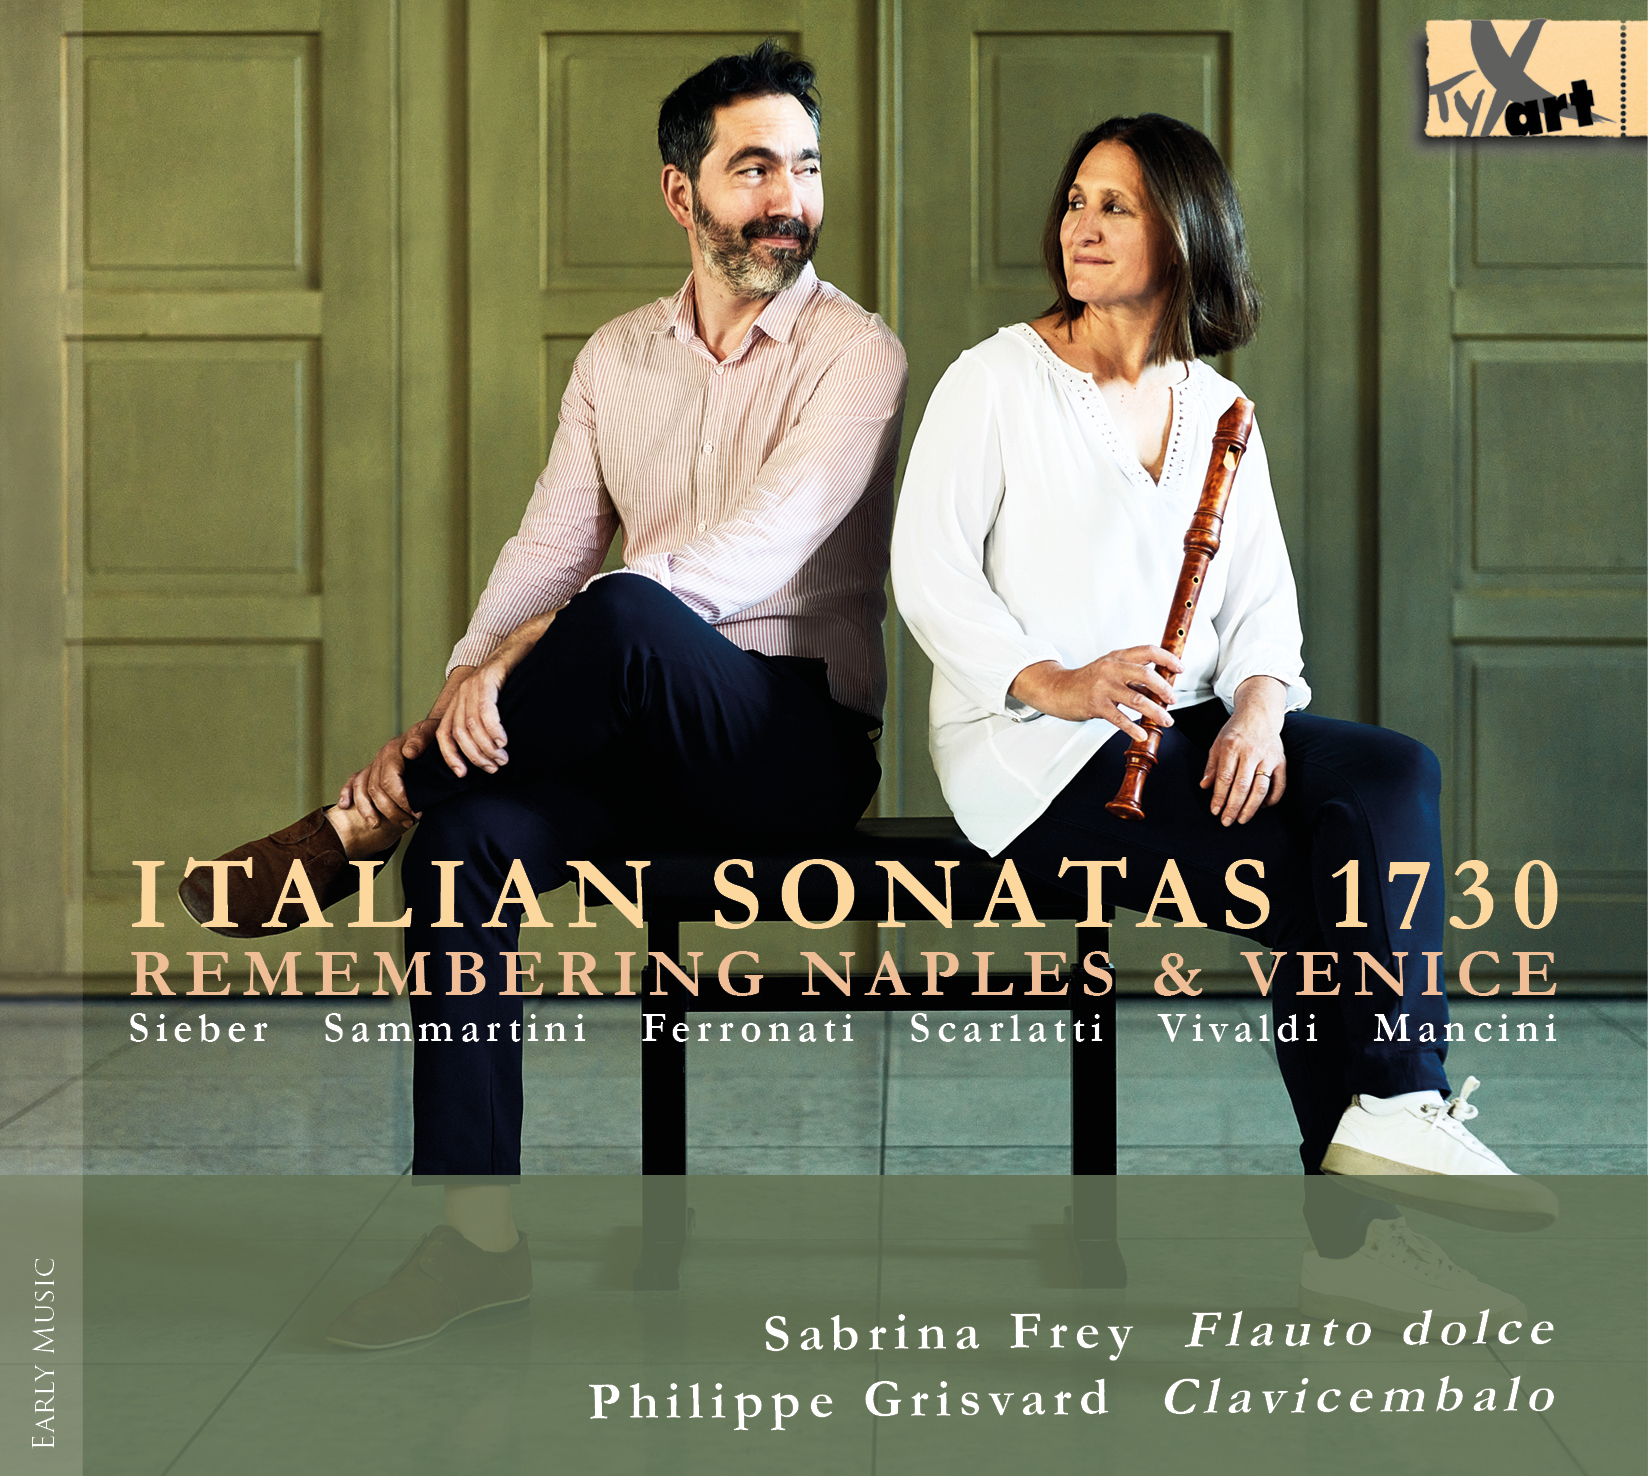 Italian Sonatas 1730 - Sabrina Frey, Recorder and Philippe Grisvard, Harpsichord